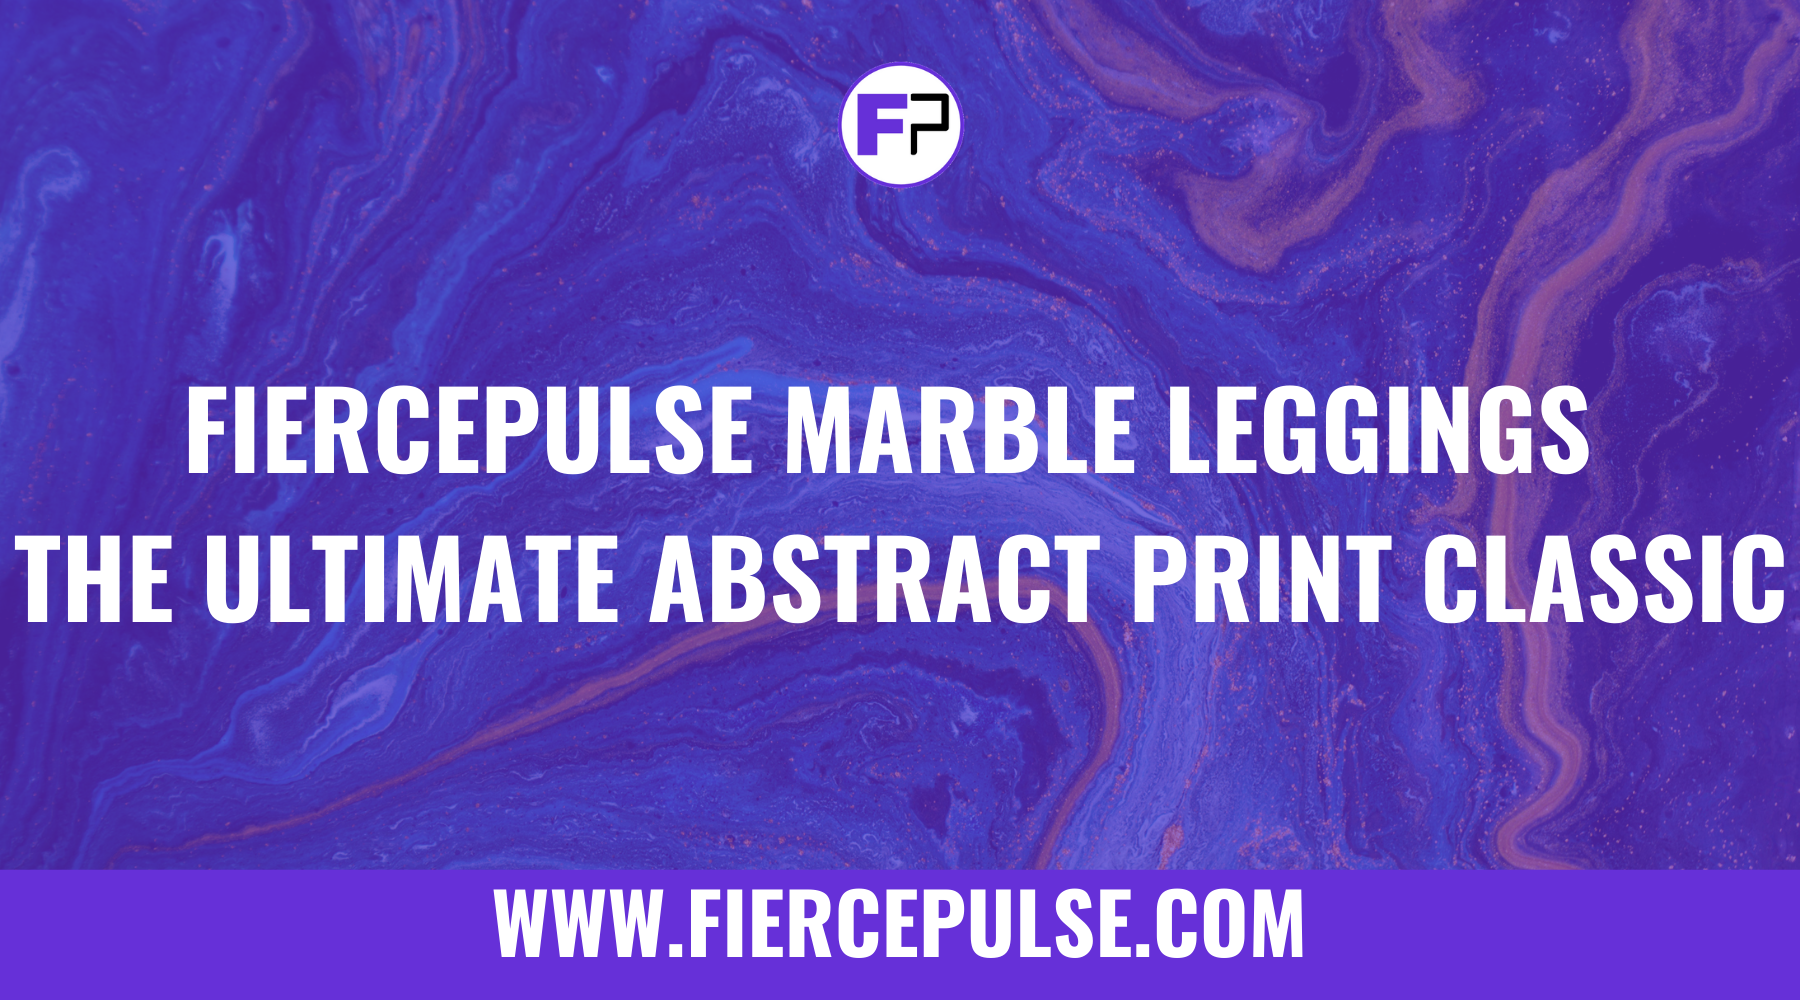 FIERCEPULSE Marble Leggings - The Ultimate Abstract Print Classic